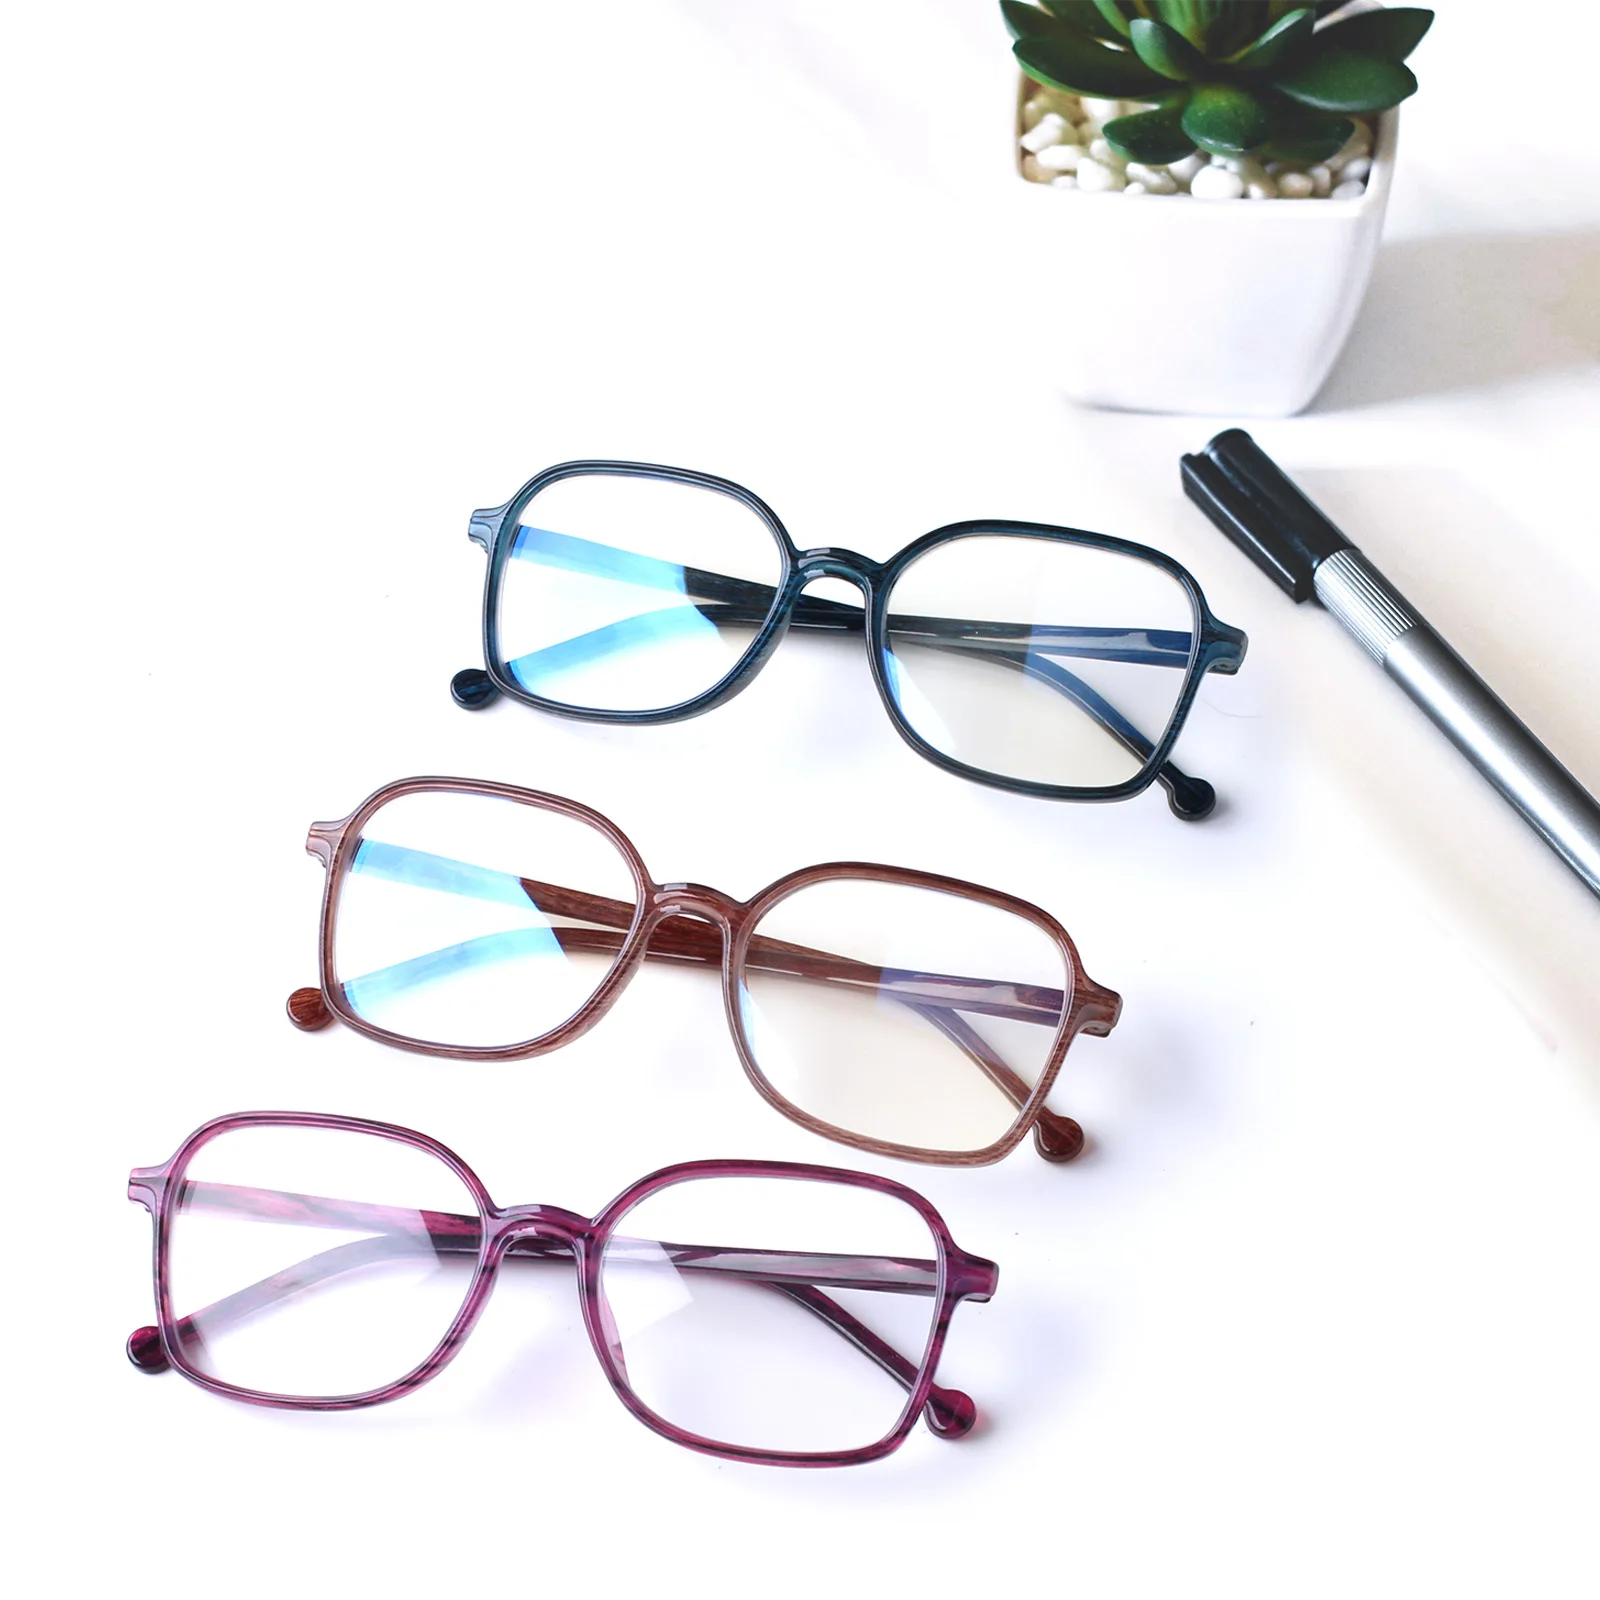 

Henotin Reading Glasses Spring Hinge Plastic Frame Men and Women HD Reader Prescription Eyeglasses Diopter +1.0+2.0+3.0+5.0+6.0